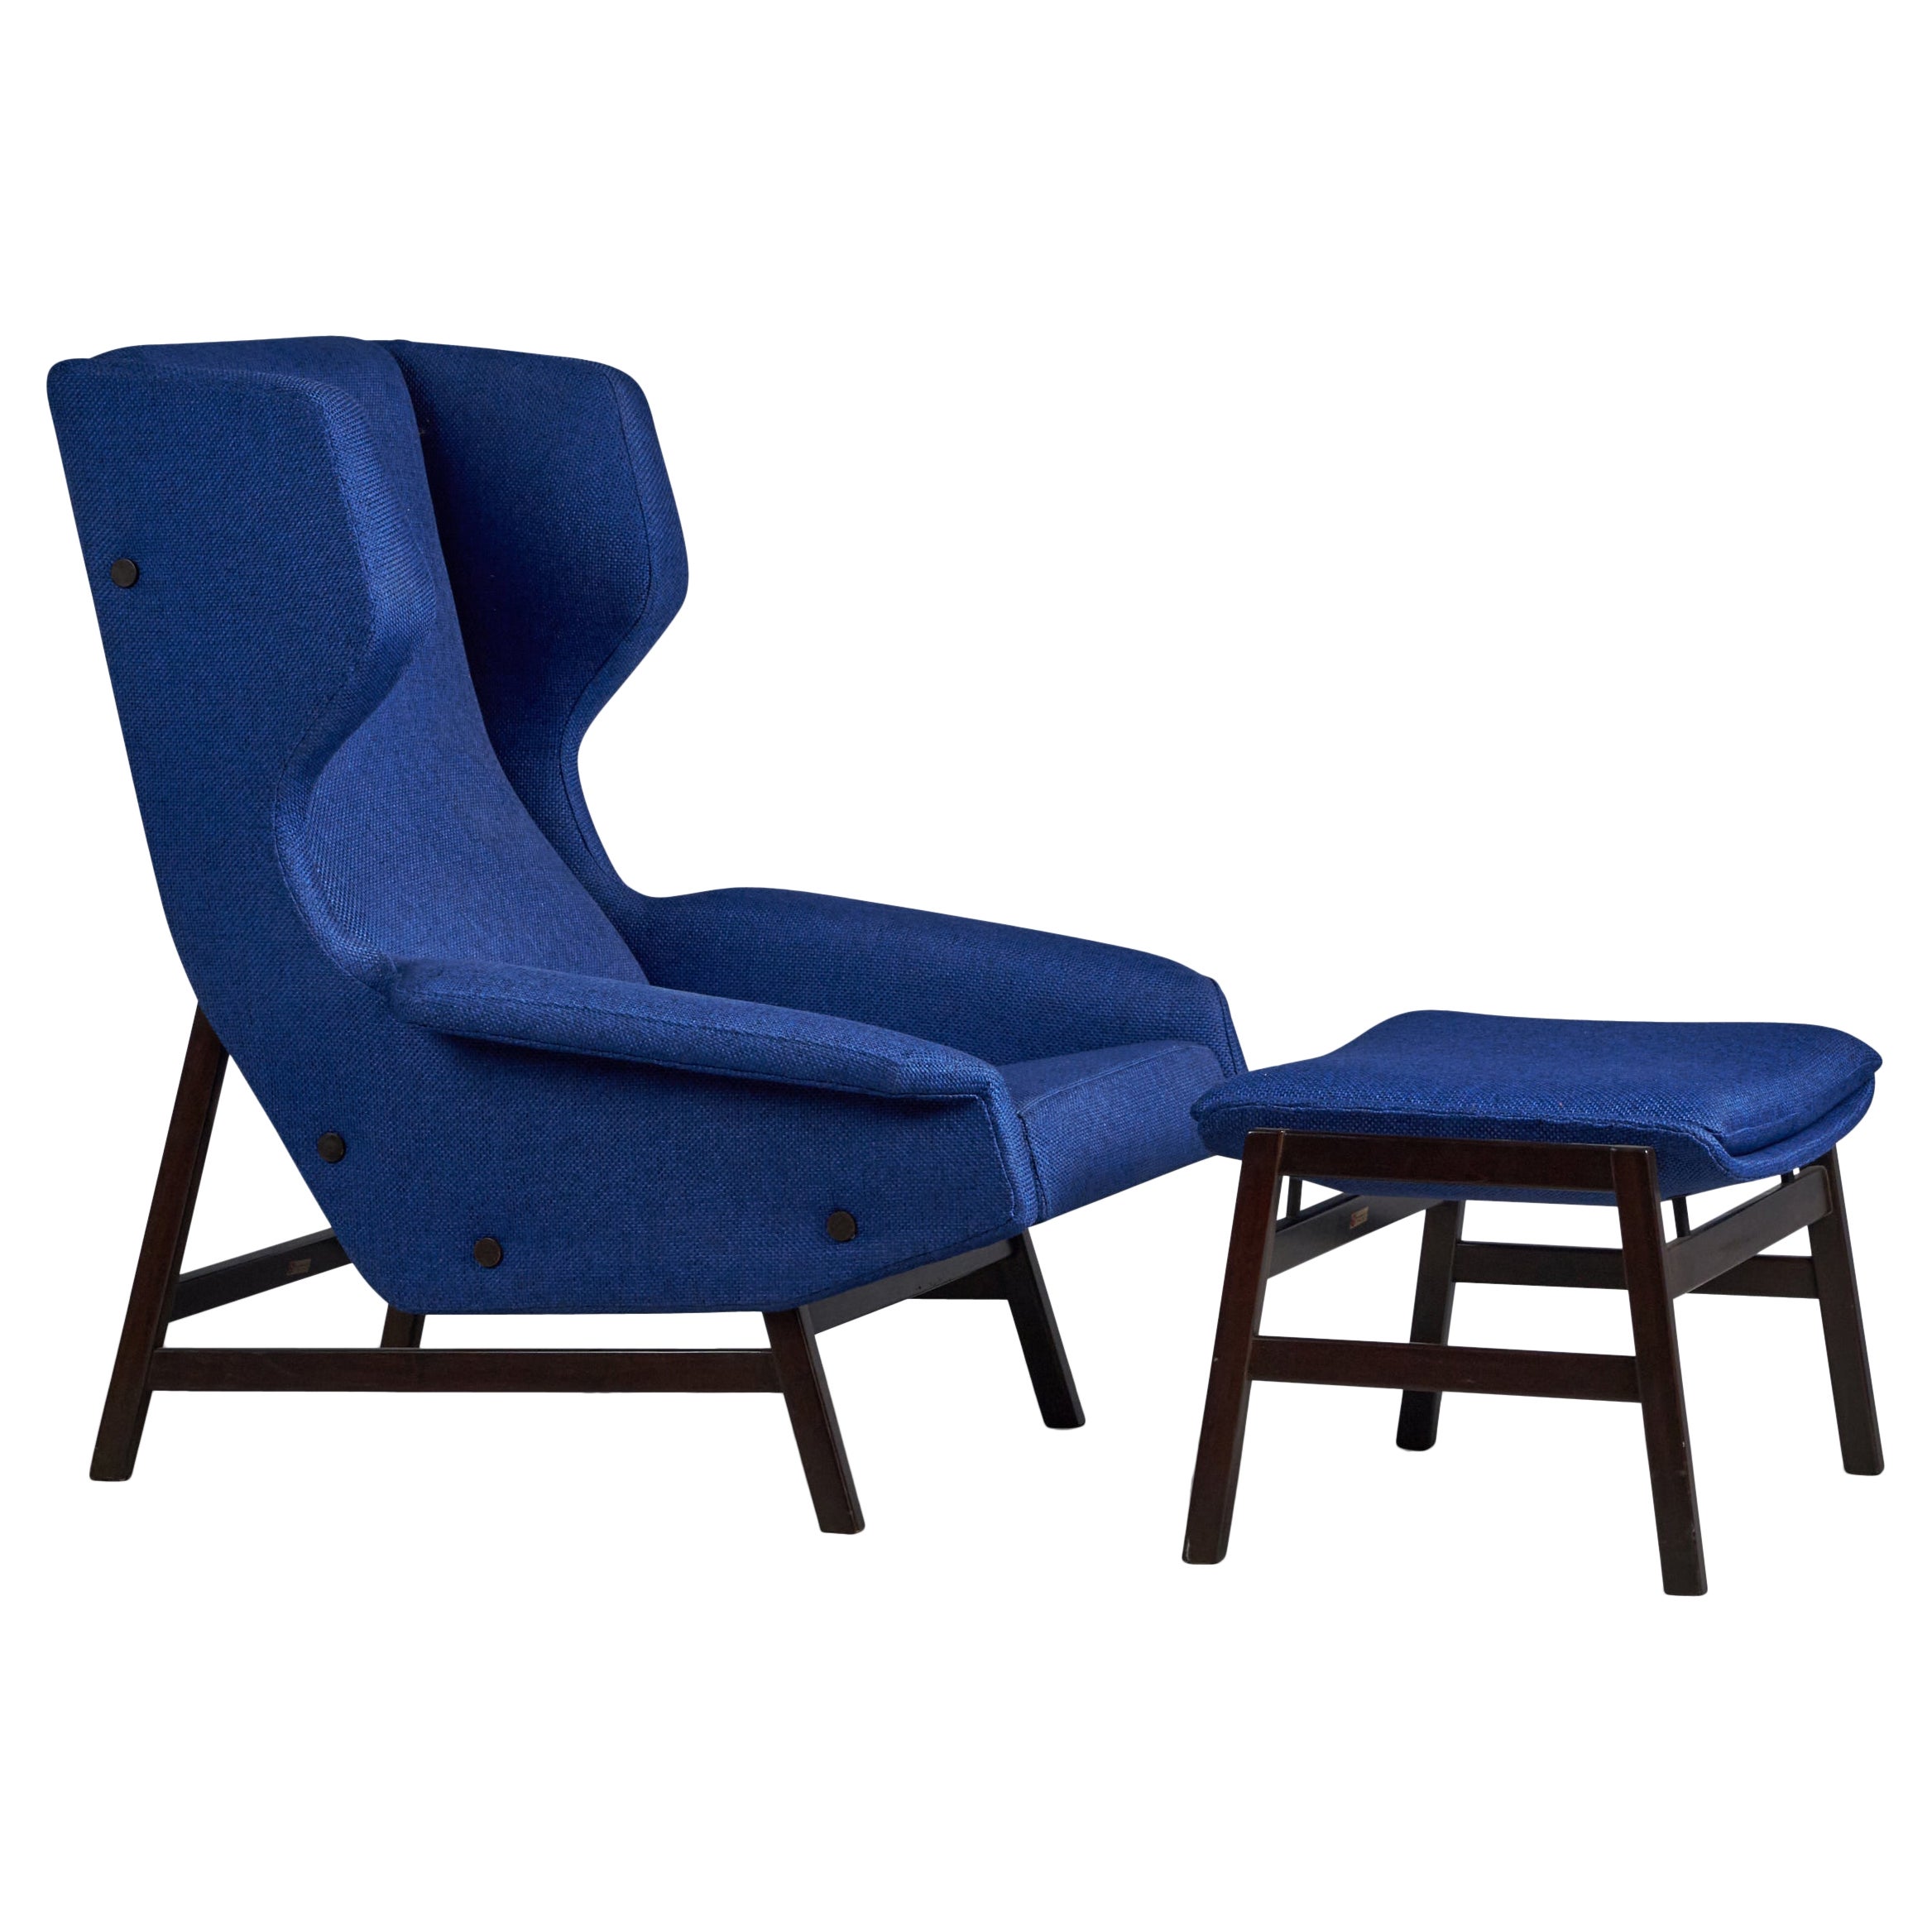 Gianfranco Frattini, Lounge Chair & Ottoman, Fabric, Wood, Italy, 1950s For Sale